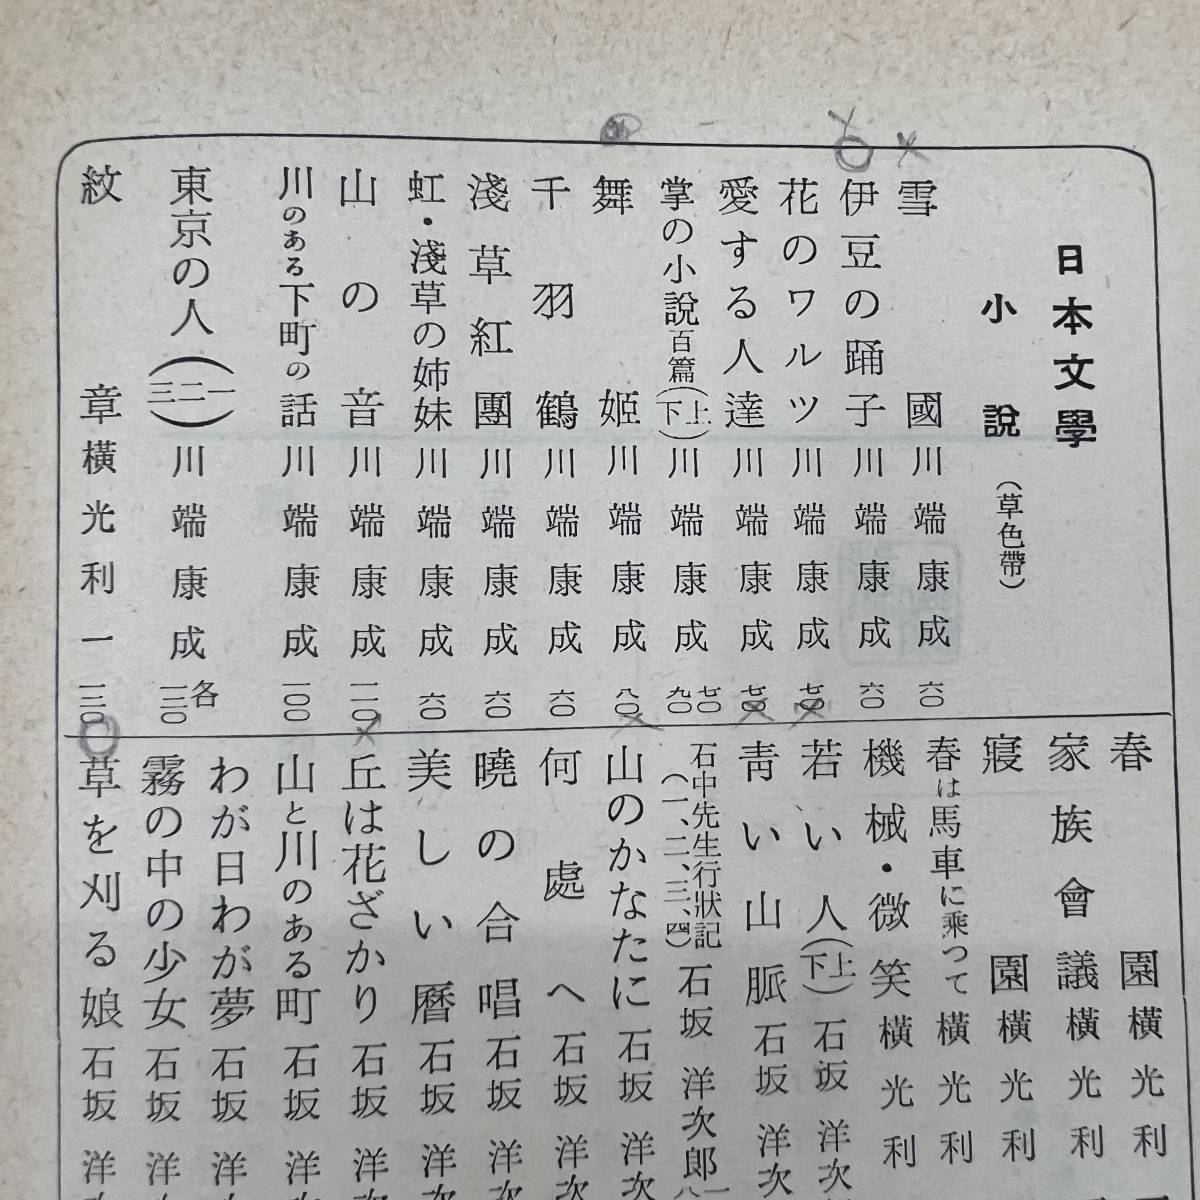 G-7791#..# Mushakoji Saneatsu / работа # Shincho Bunko #(1963 год ) Showa 38 год 6 месяц 20 день выпуск no. 52.